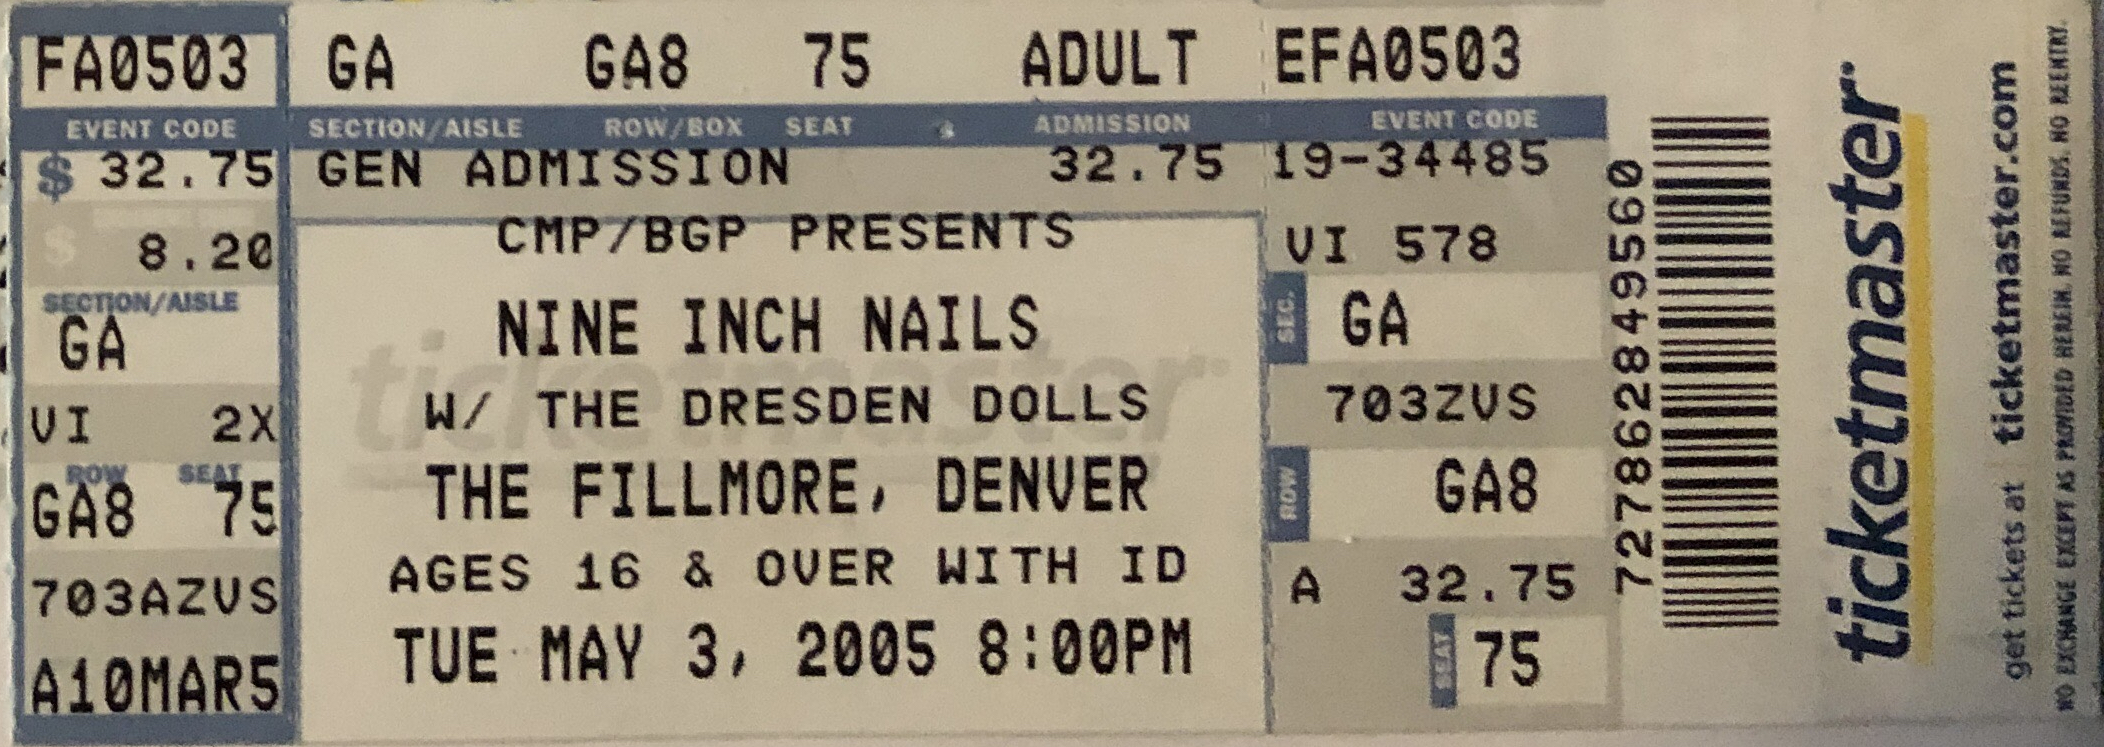 2005/05/03 Ticket